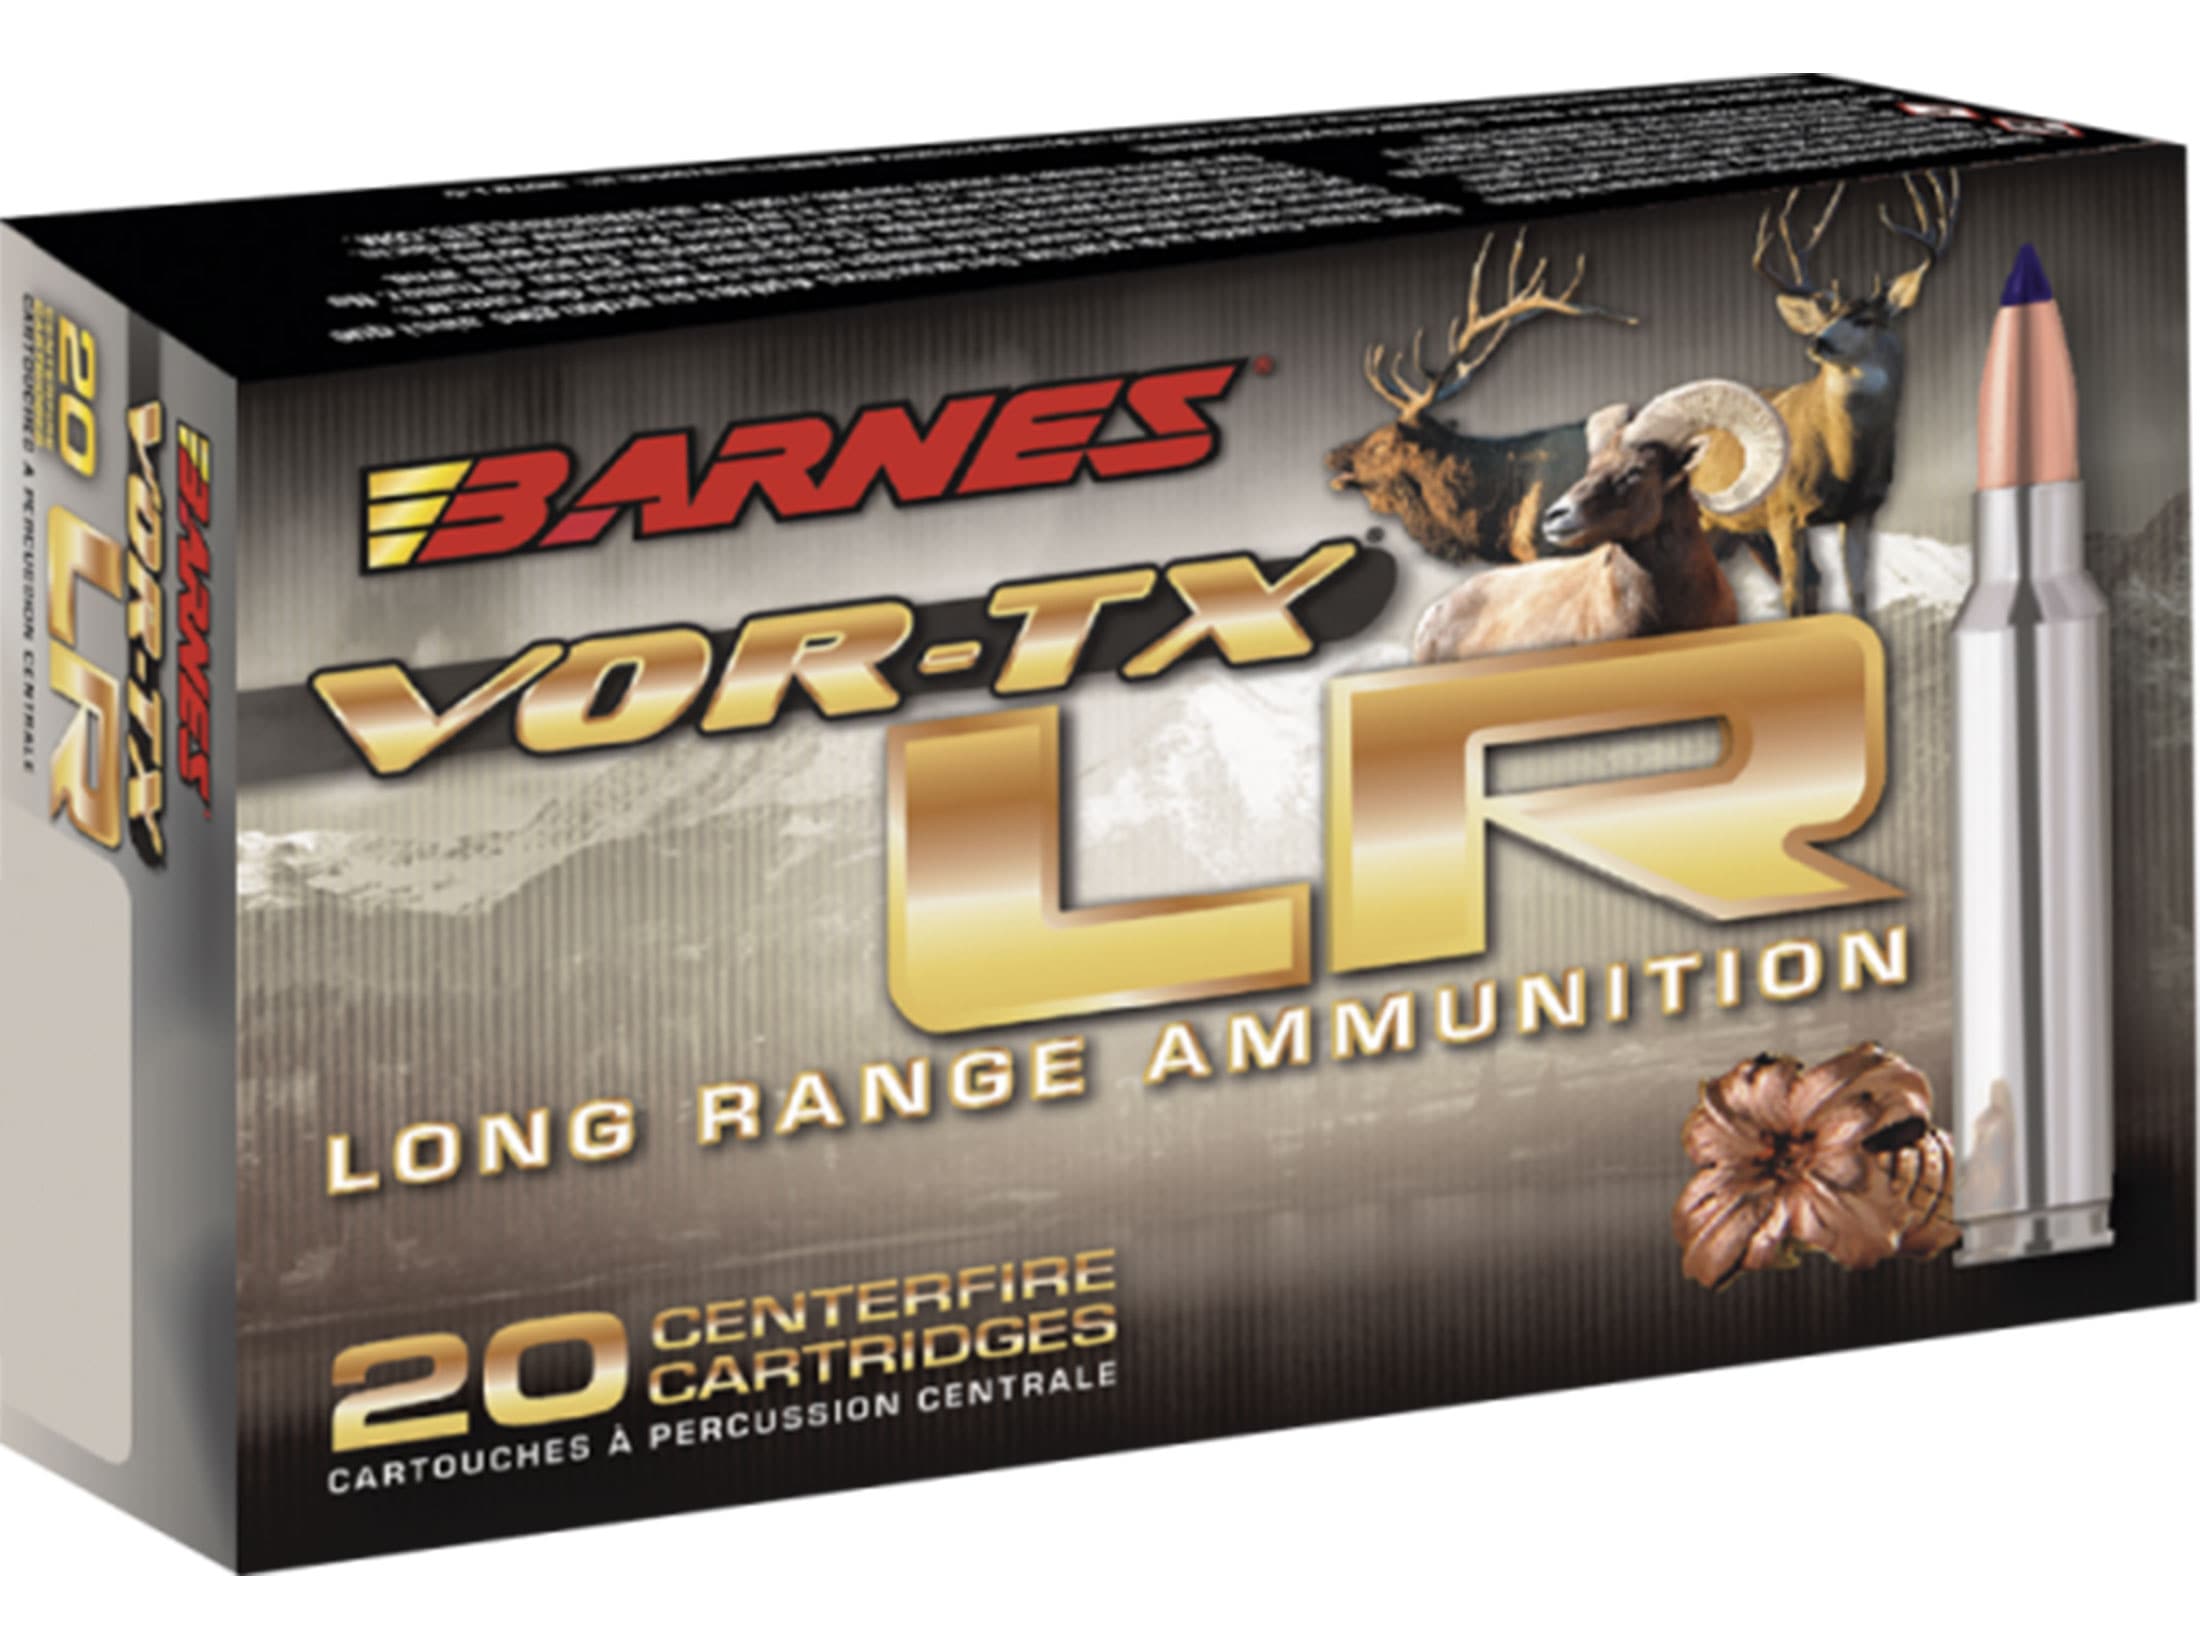 Barnes VOR-TX Long Range Ammunition 6.5 Creedmoor 127 Grain LRX Polymer Tipped Boat Tail Lead-Free Box of 20